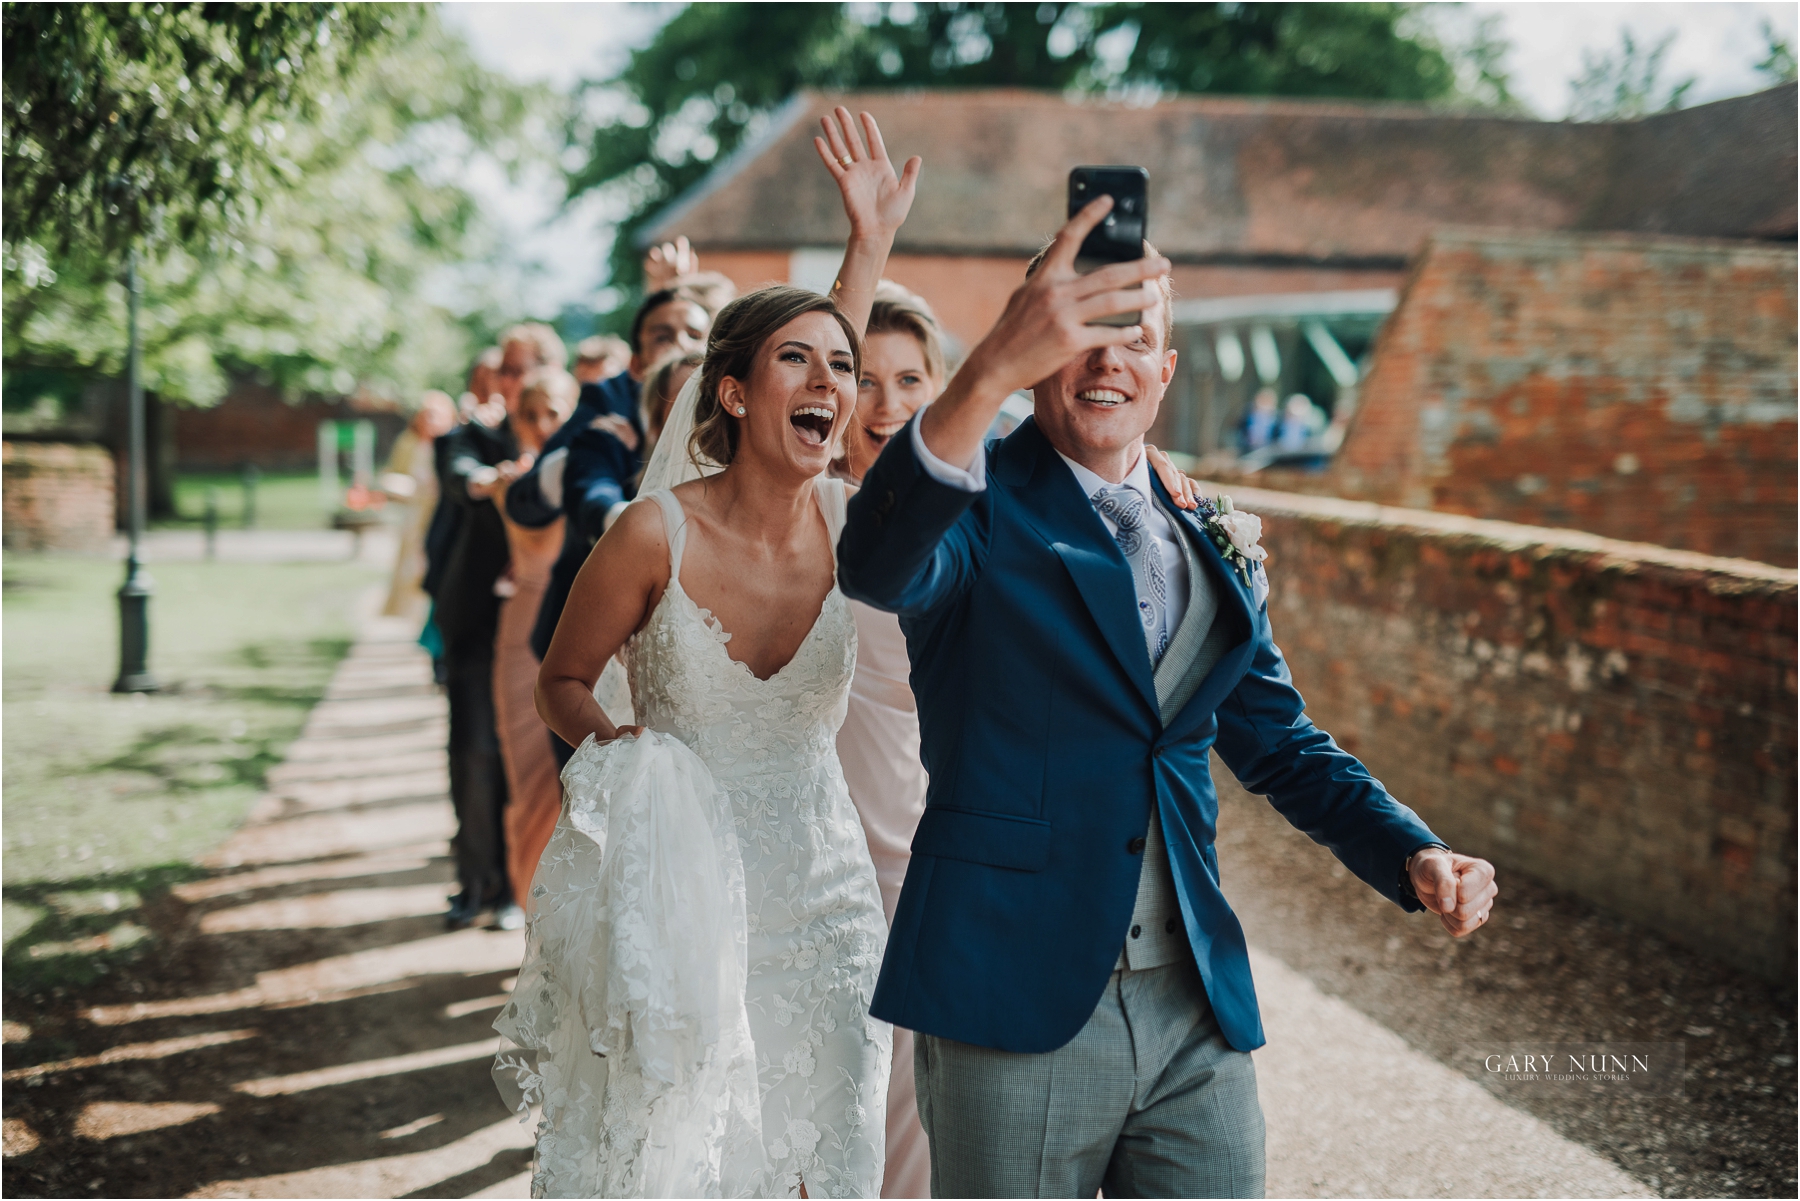 Wedding Photographer Milton Keynes, outdoor wedding, outdoor wedding